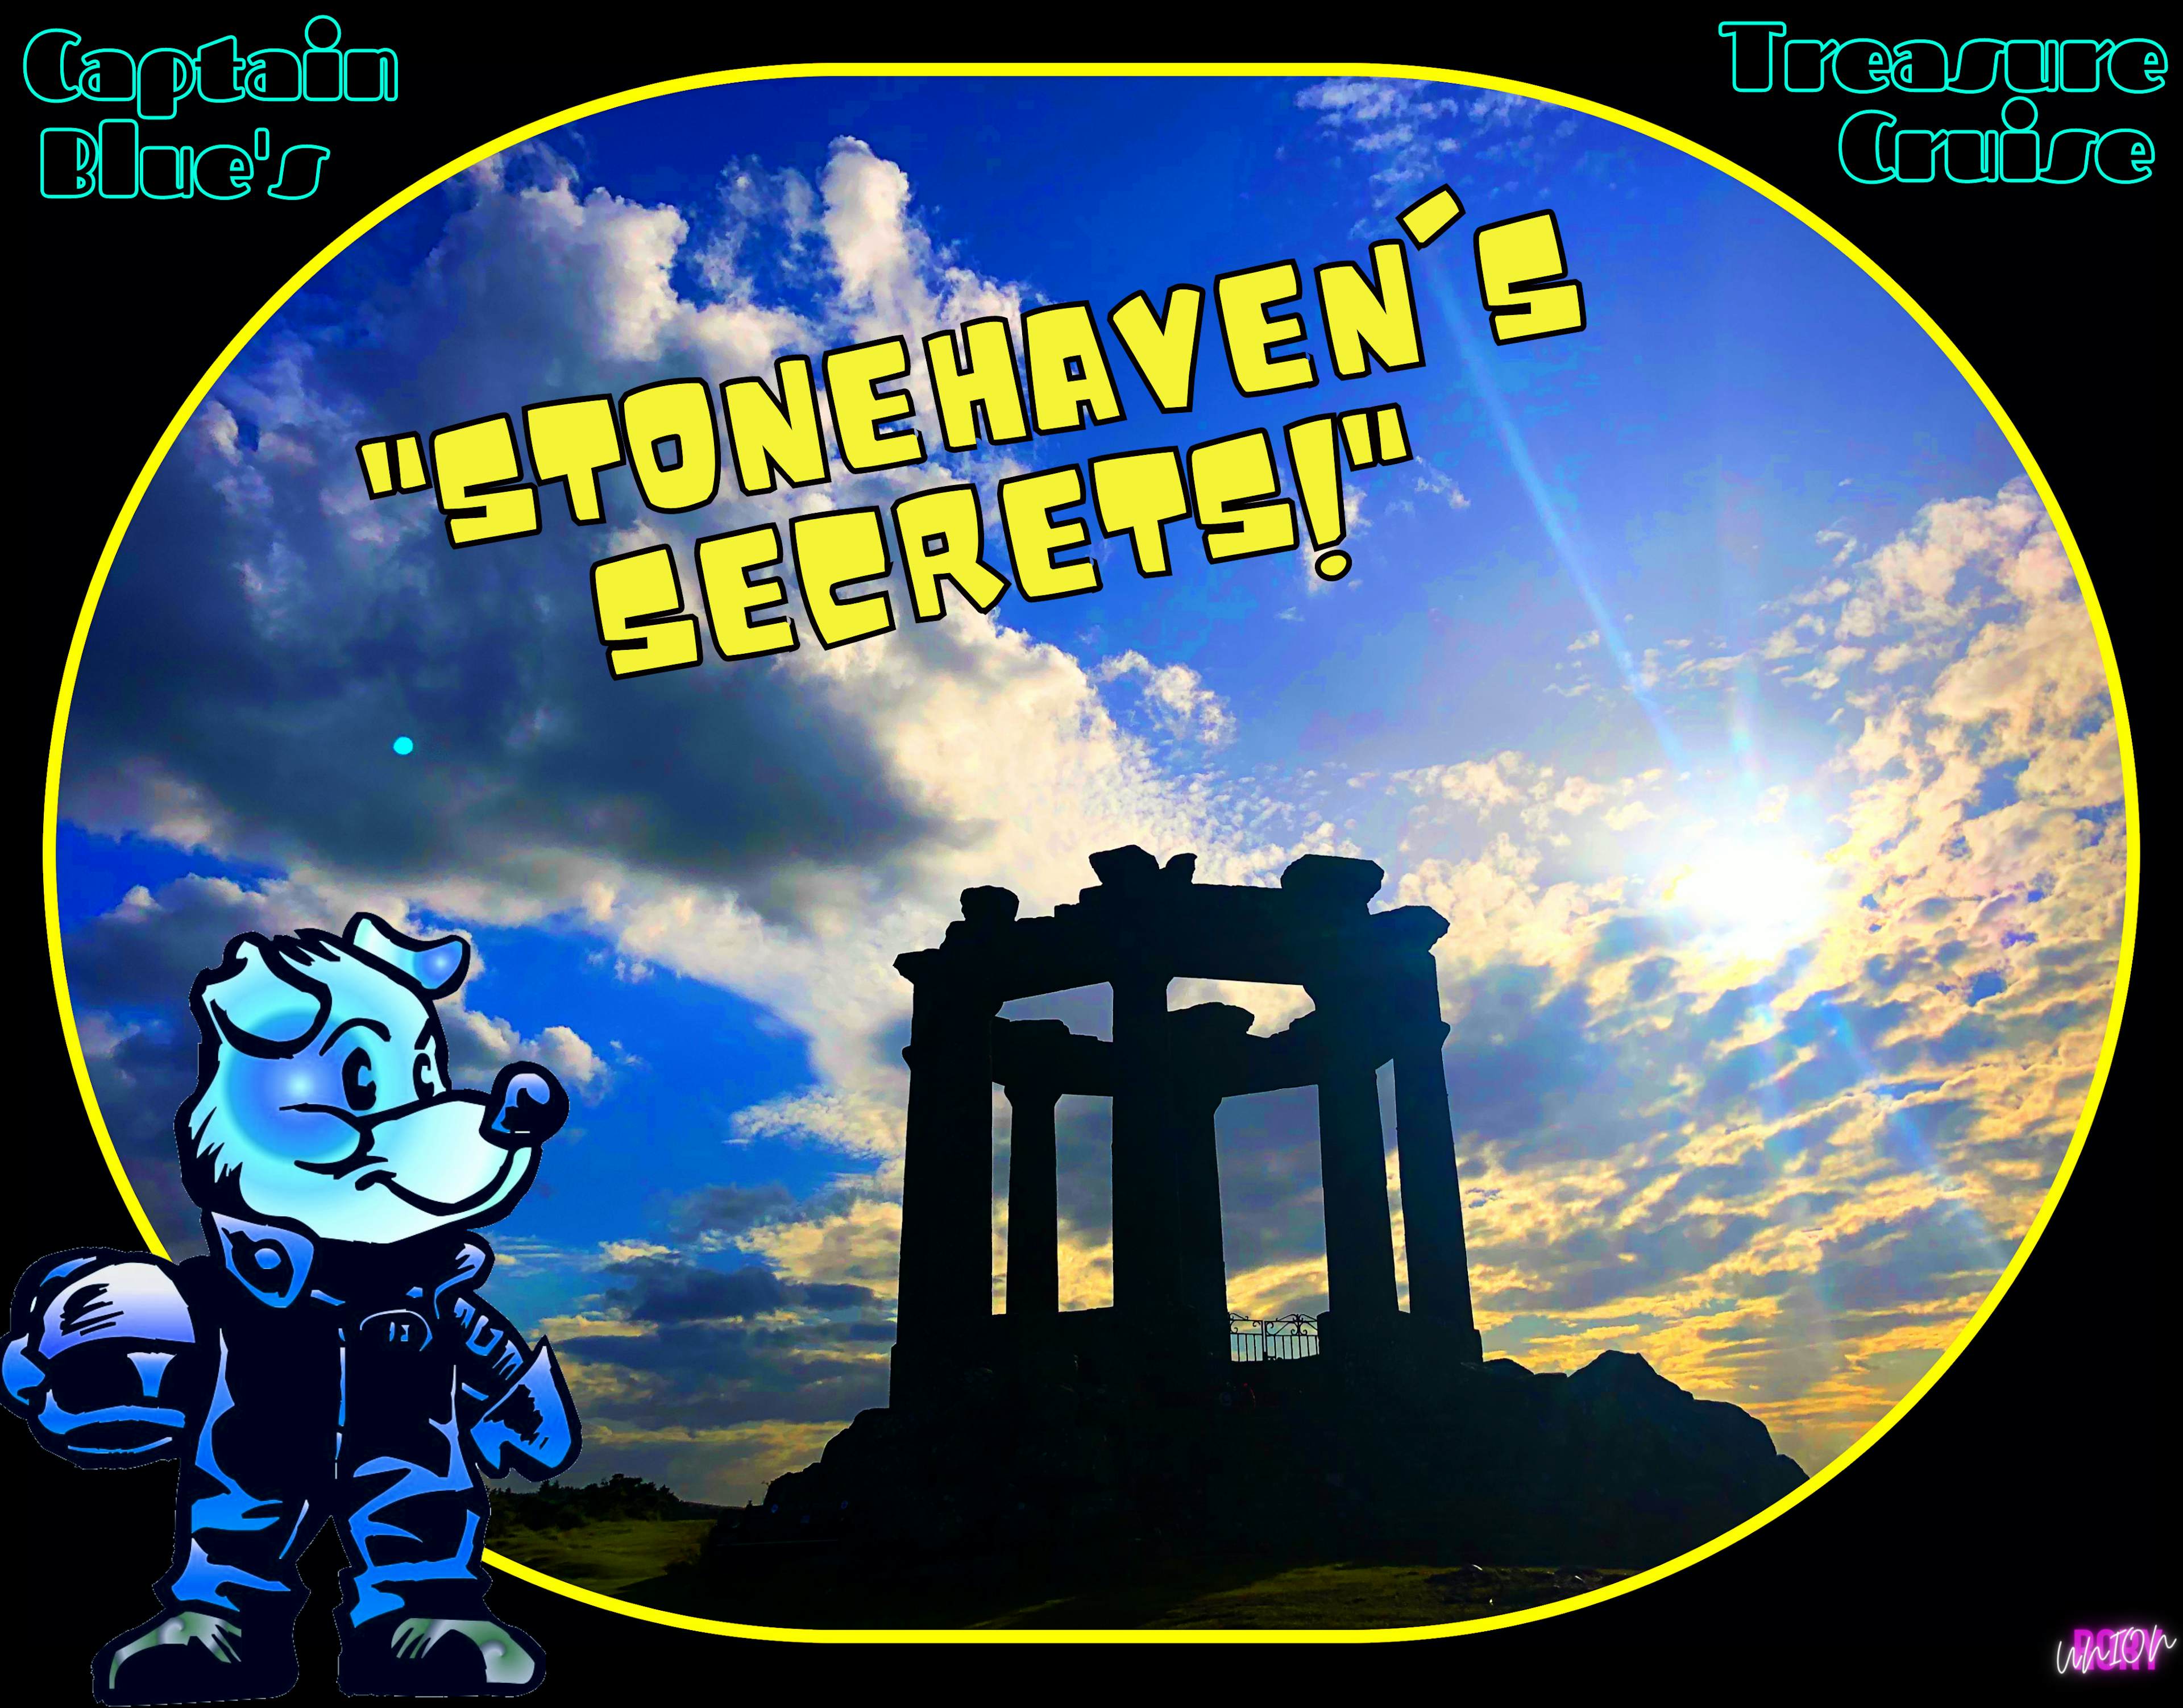 Captain Blue's Treasure Cruise : Stonehaven's Secrets! image